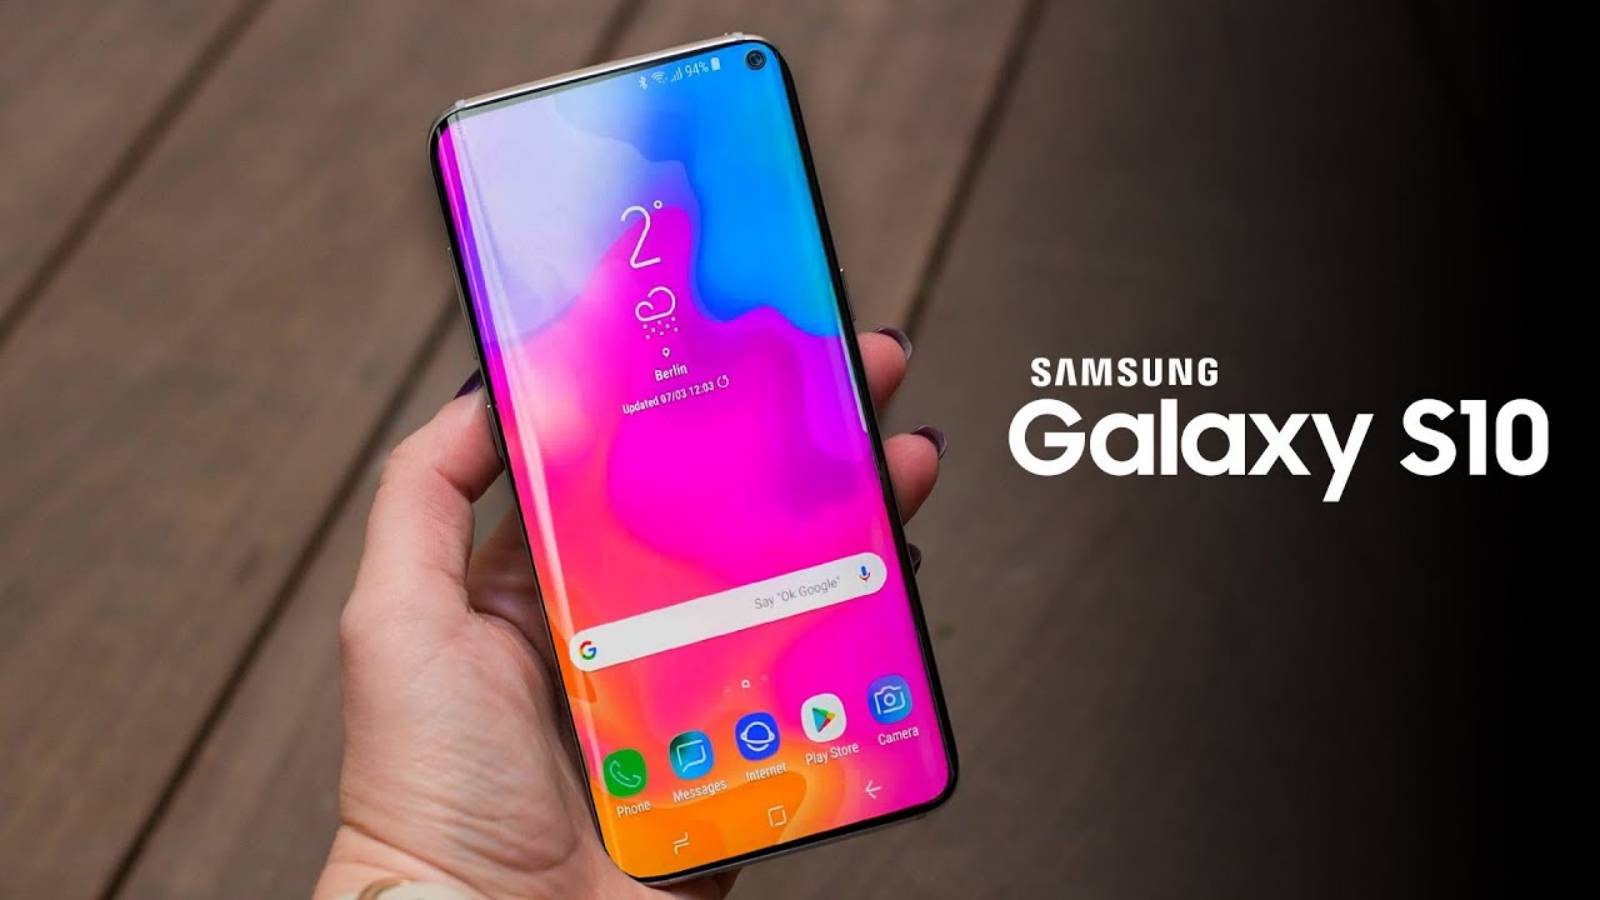 eMAG Samsung GALAXY S10 REDUCERI BLACK FRIDAY 2019